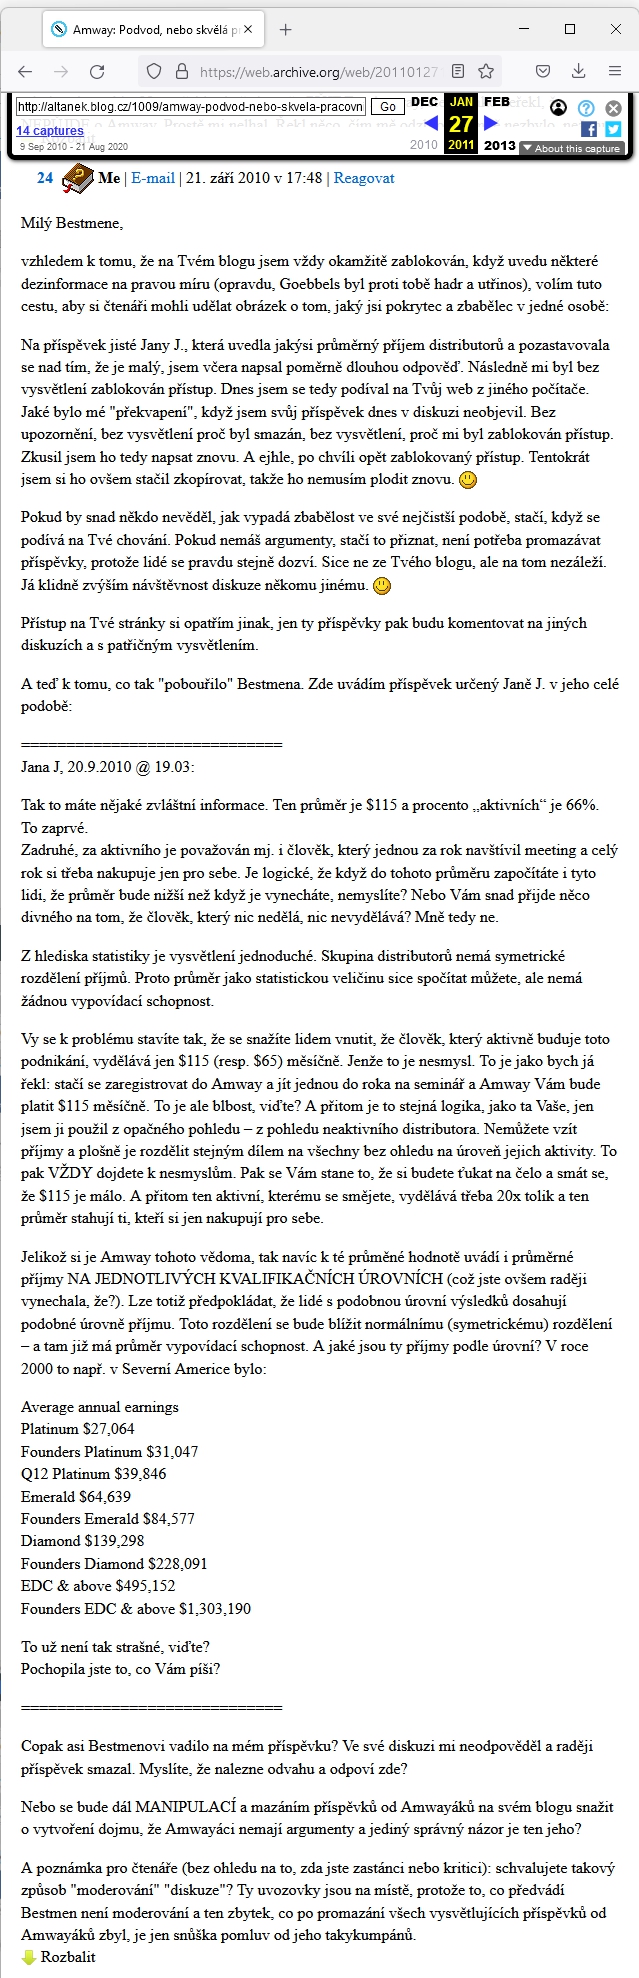 Printscreen 1 - diskuze altanek.blog.cz